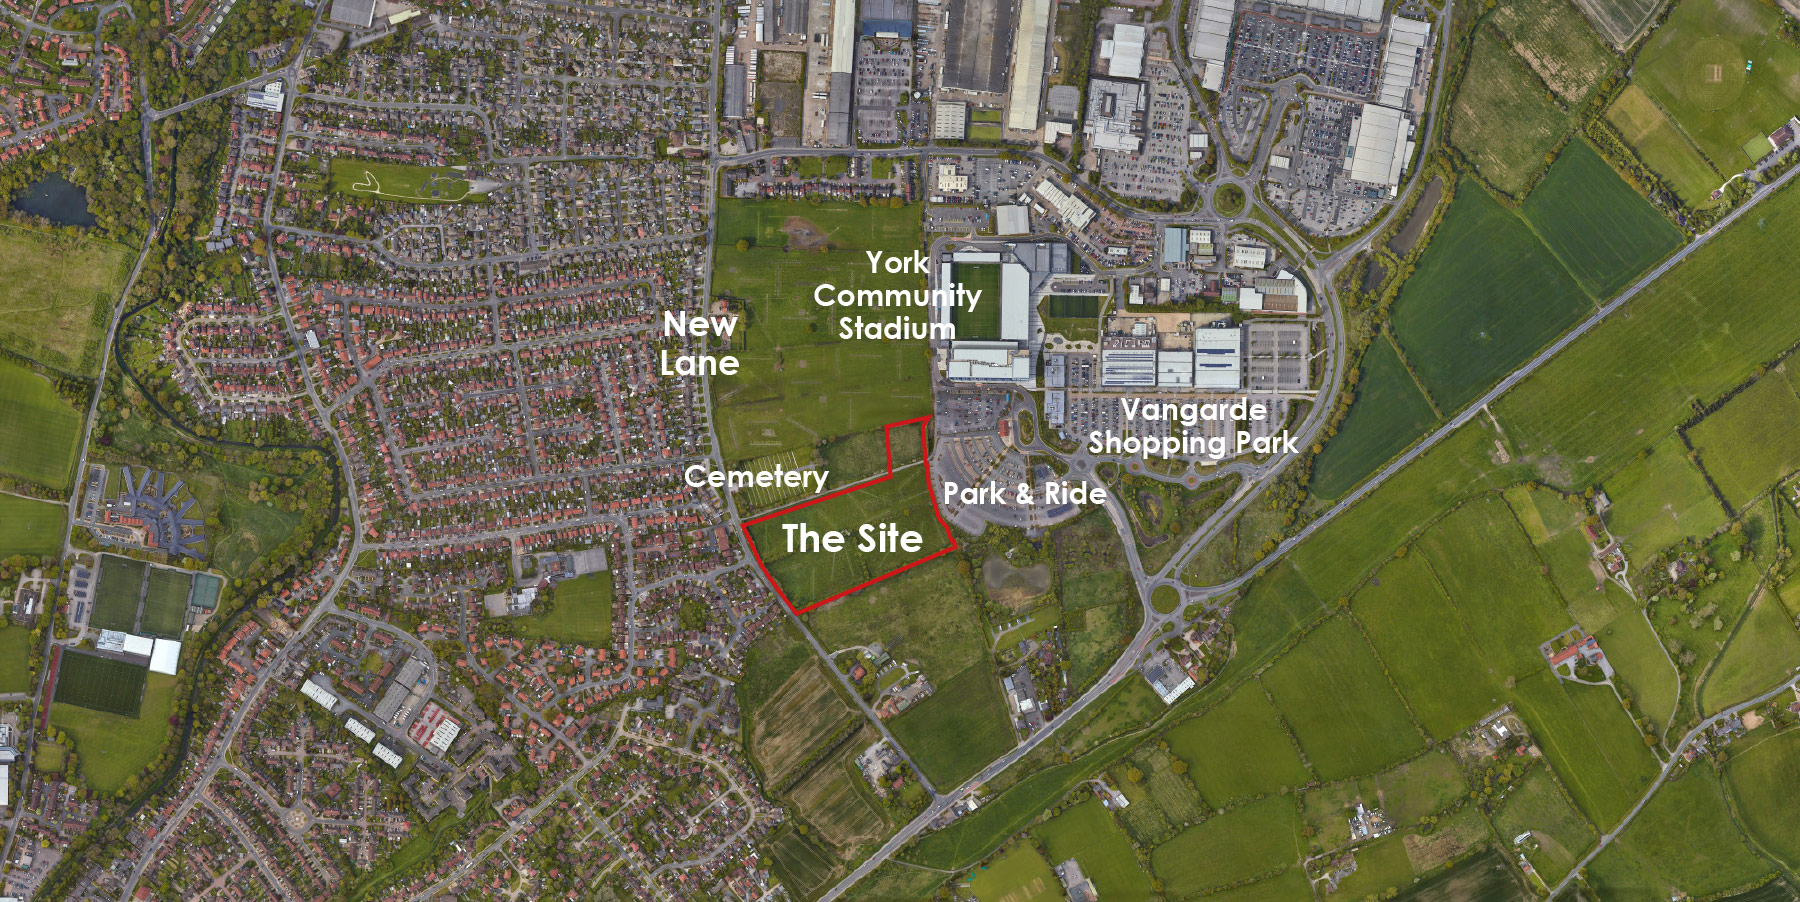 Location plan of New Lane site